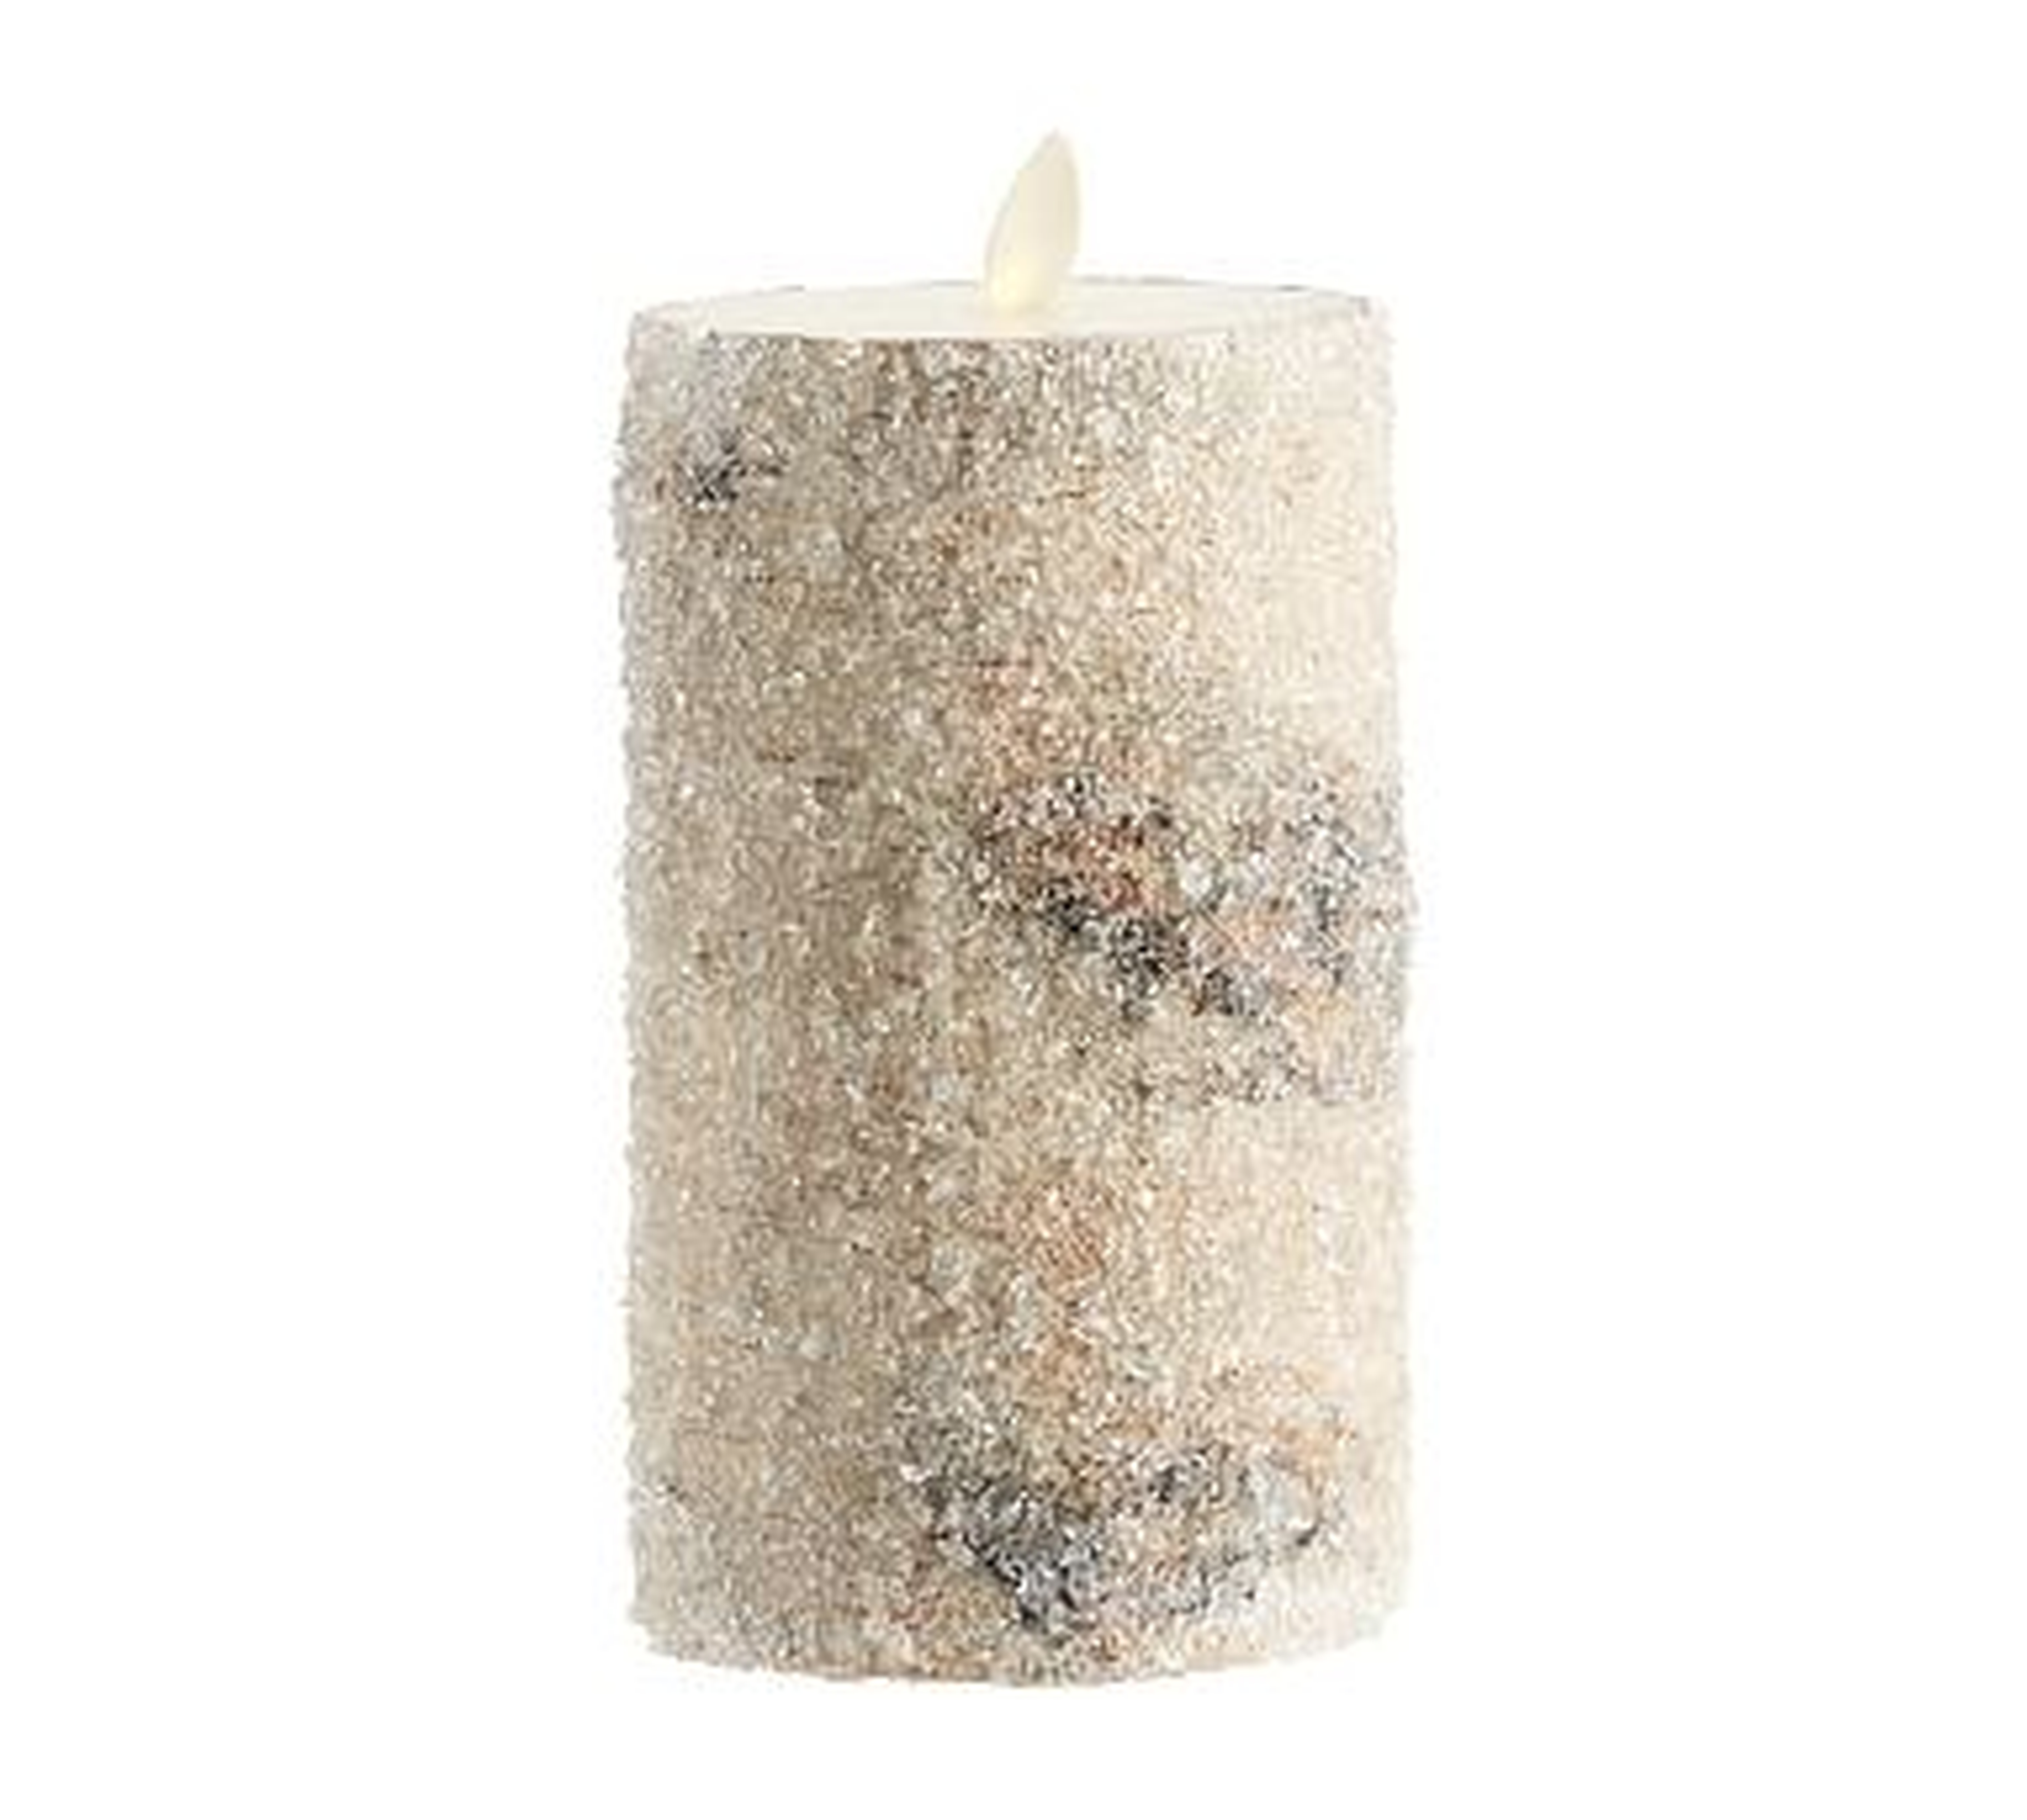 Premium Flickering Flameless Wax Pillar Candle, 3"x6" - Sugared Birch - Pottery Barn